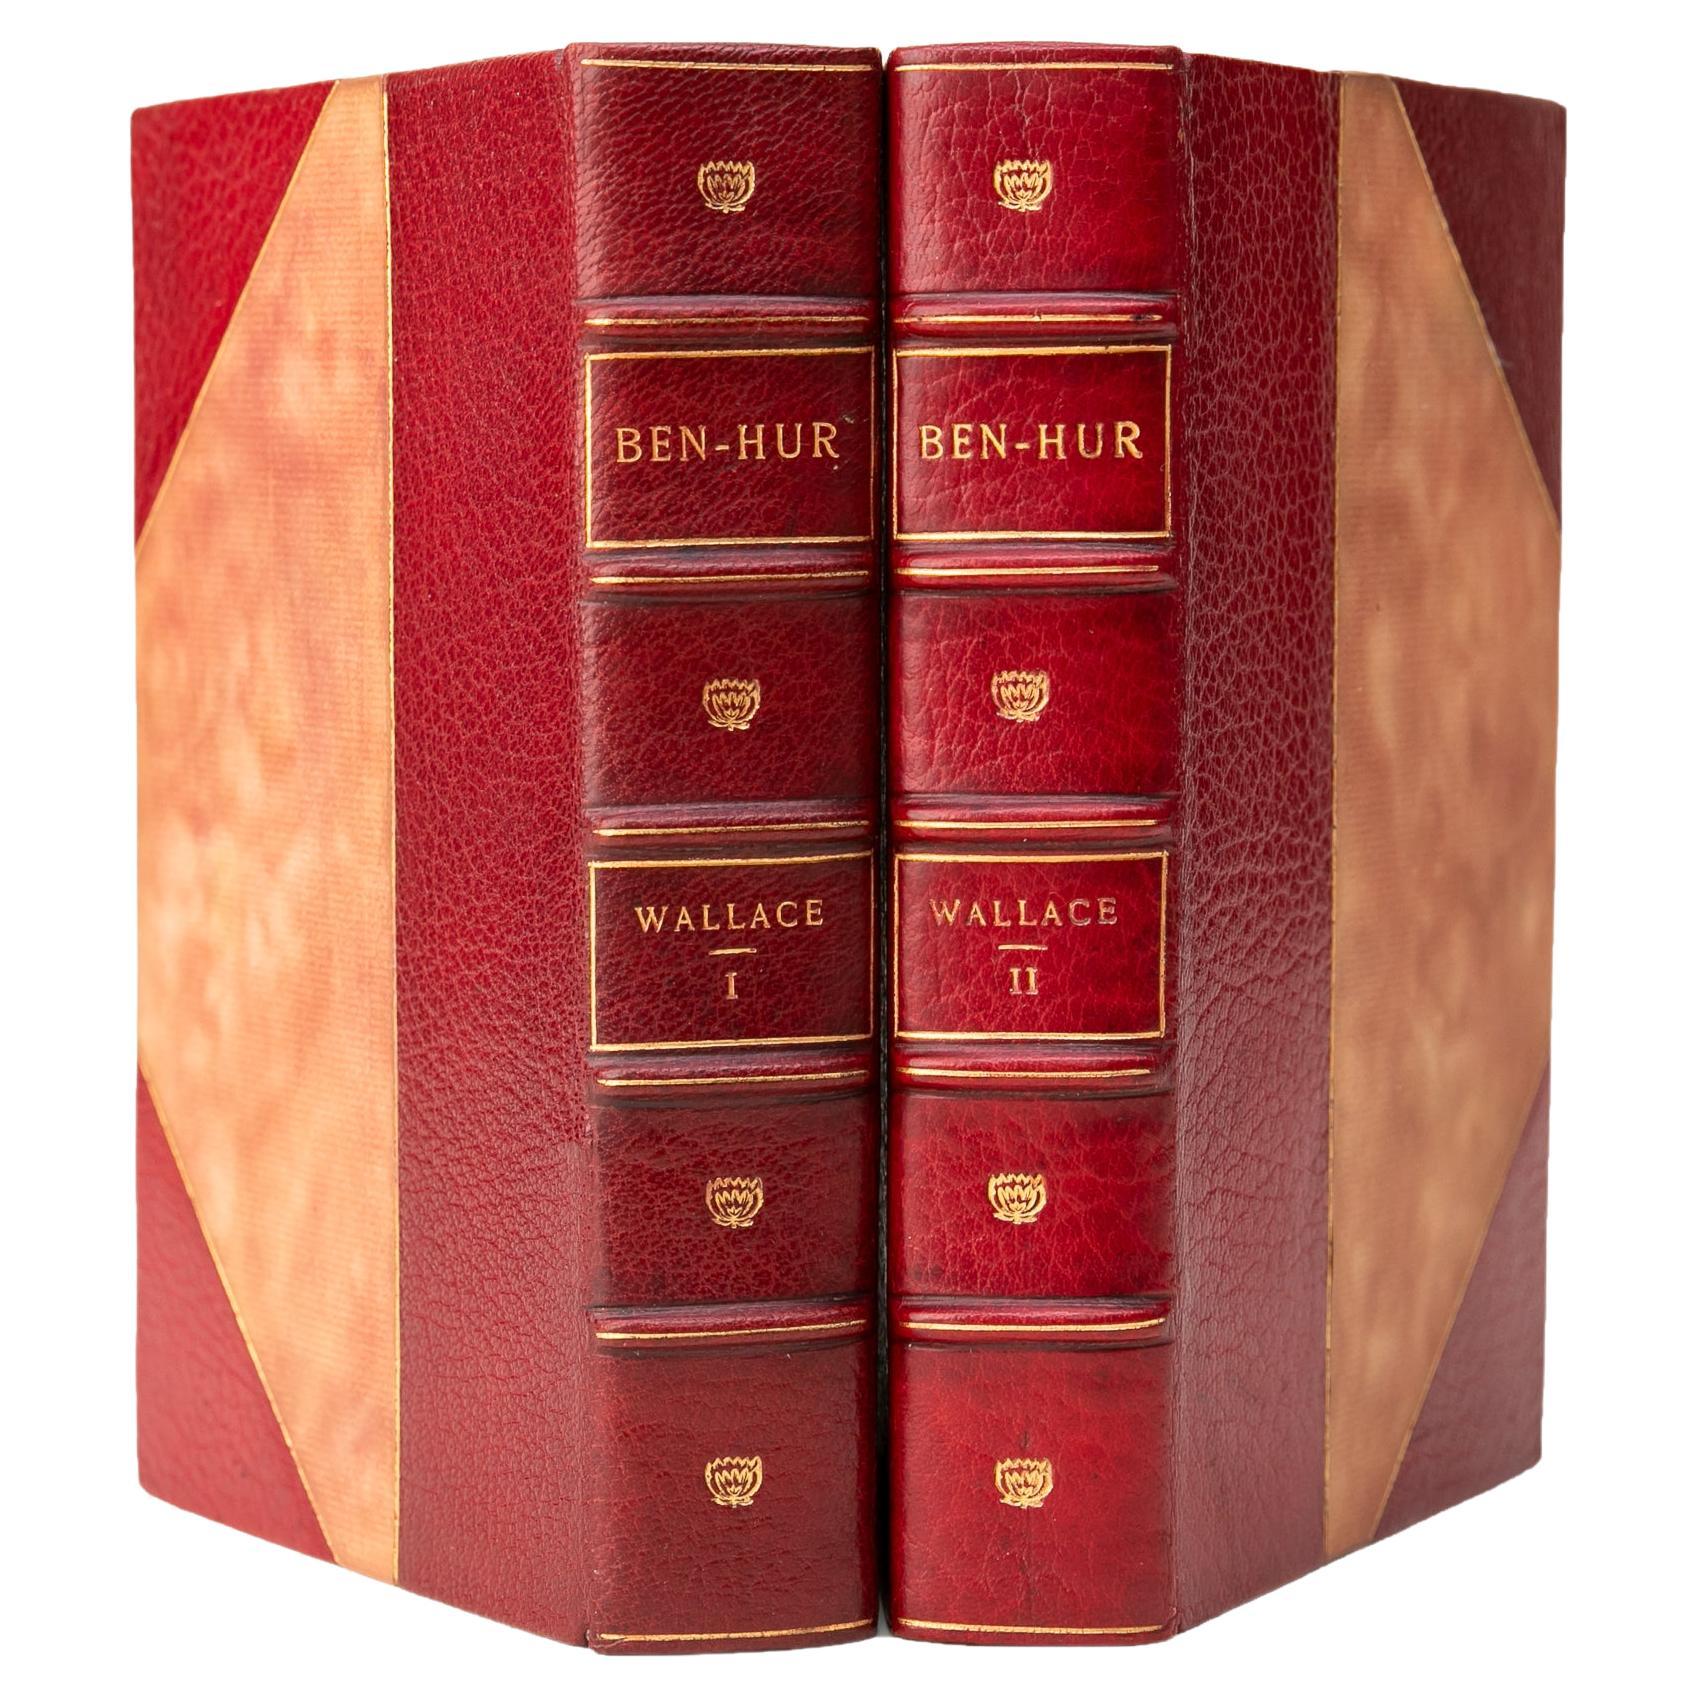 2 Volumes. Lew Wallace, Ben-Hur. For Sale